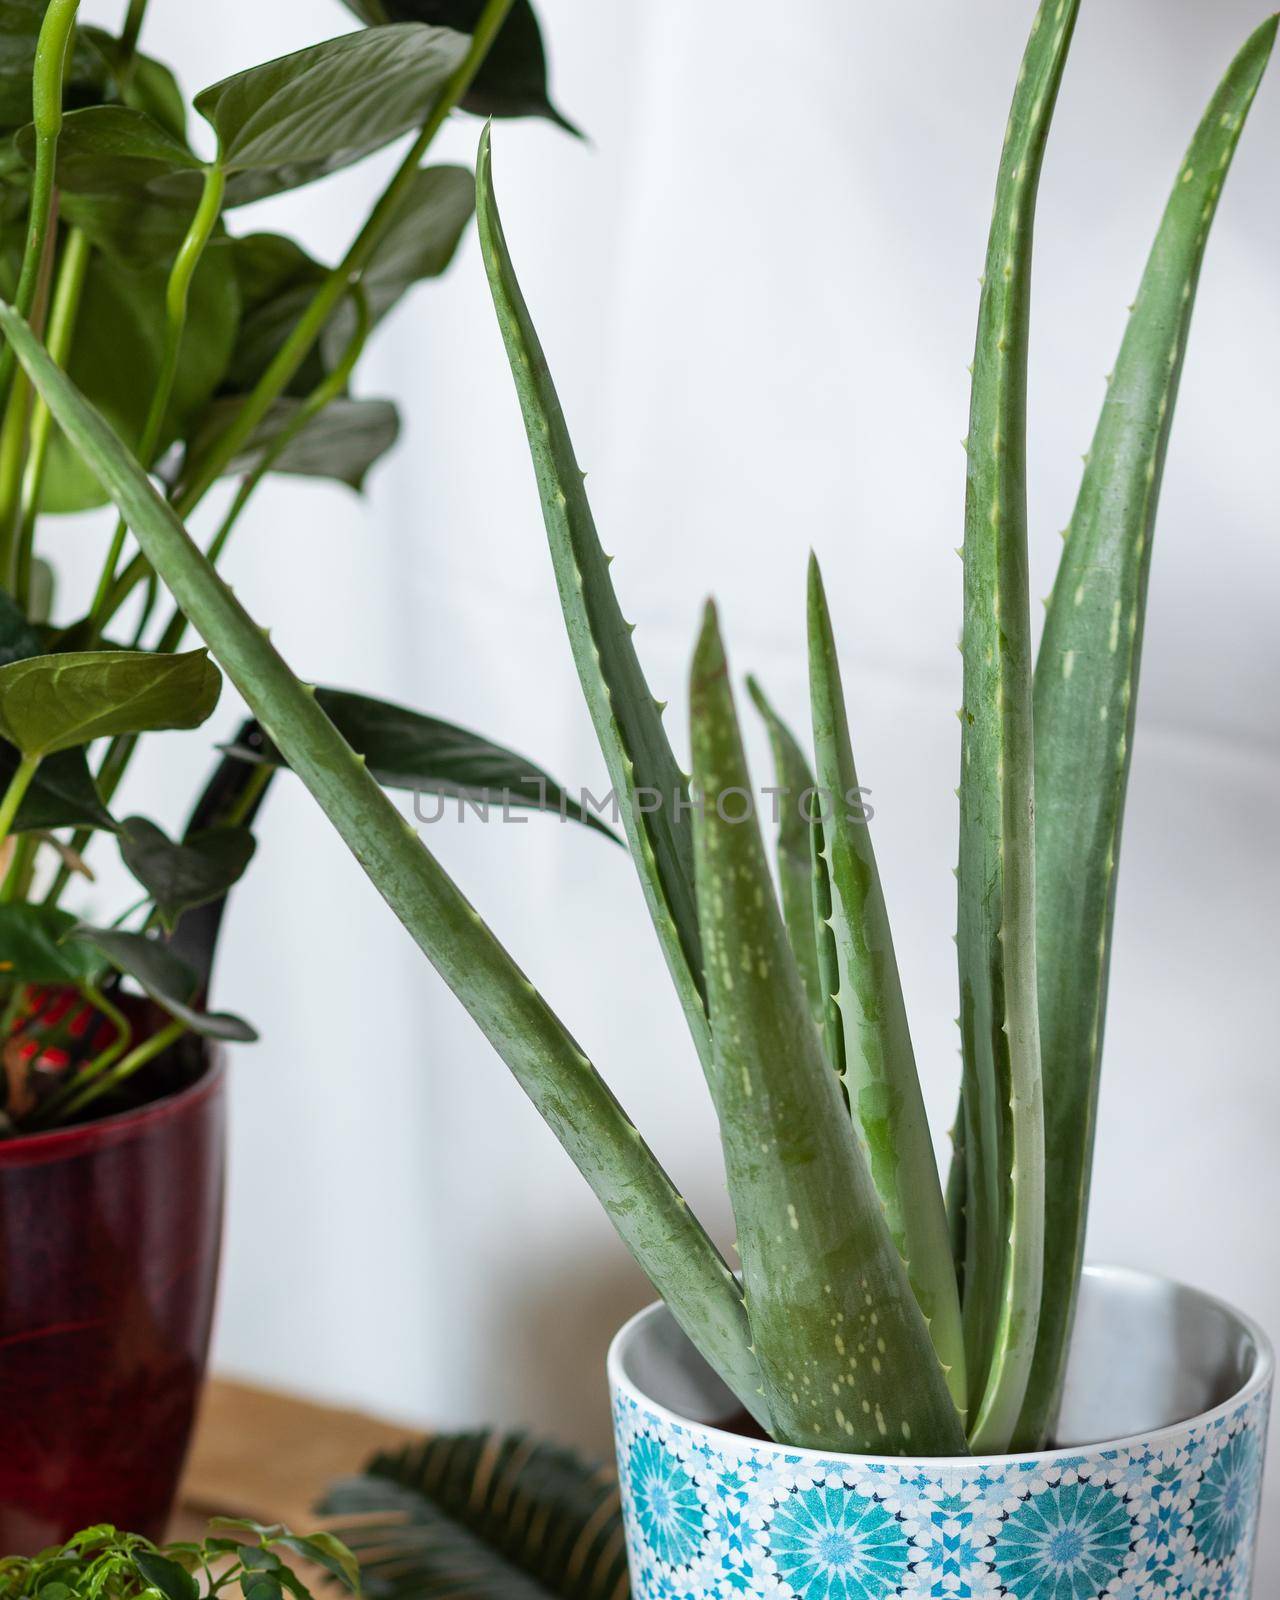 Aloe vera plant close up by ferhad